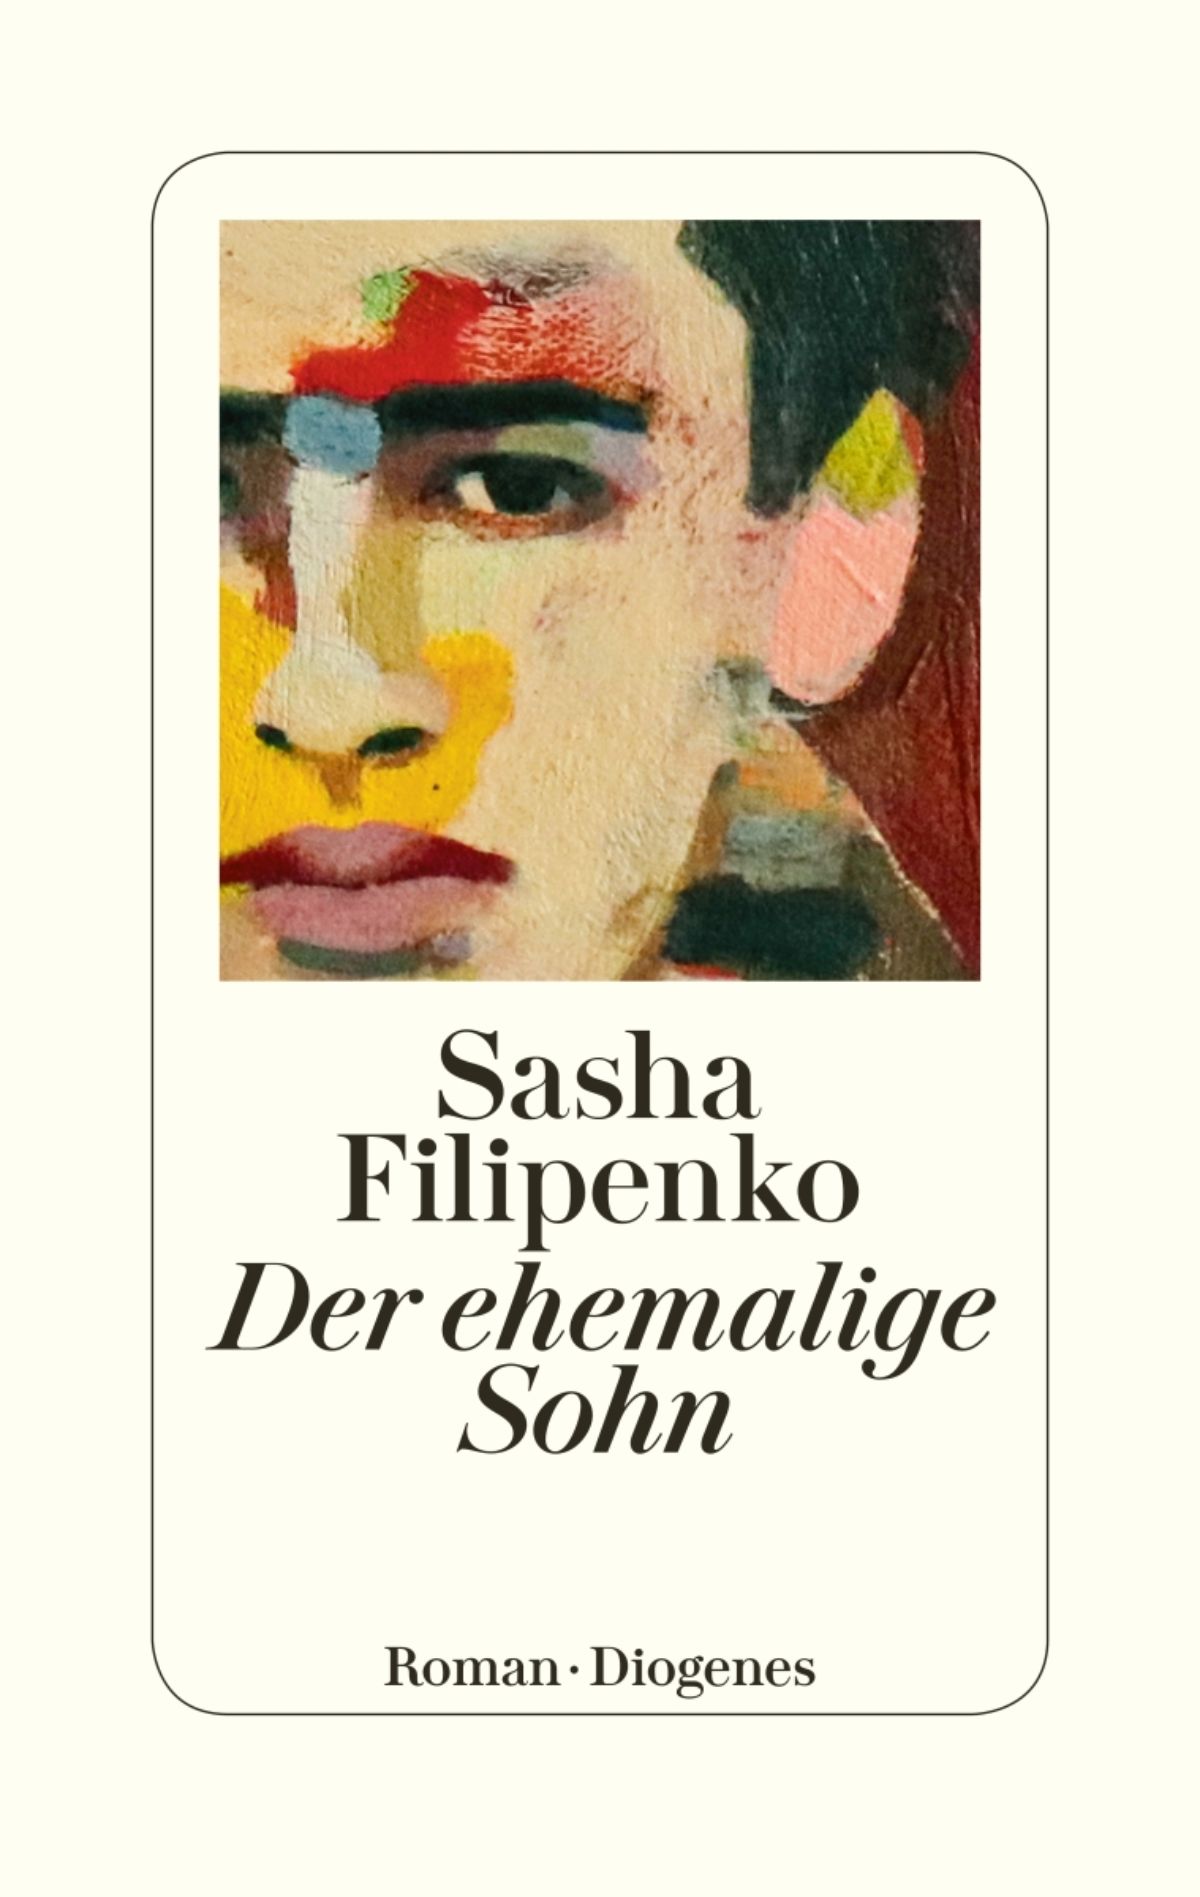 Buchcover von Sasha Filipenkos neuem Roman